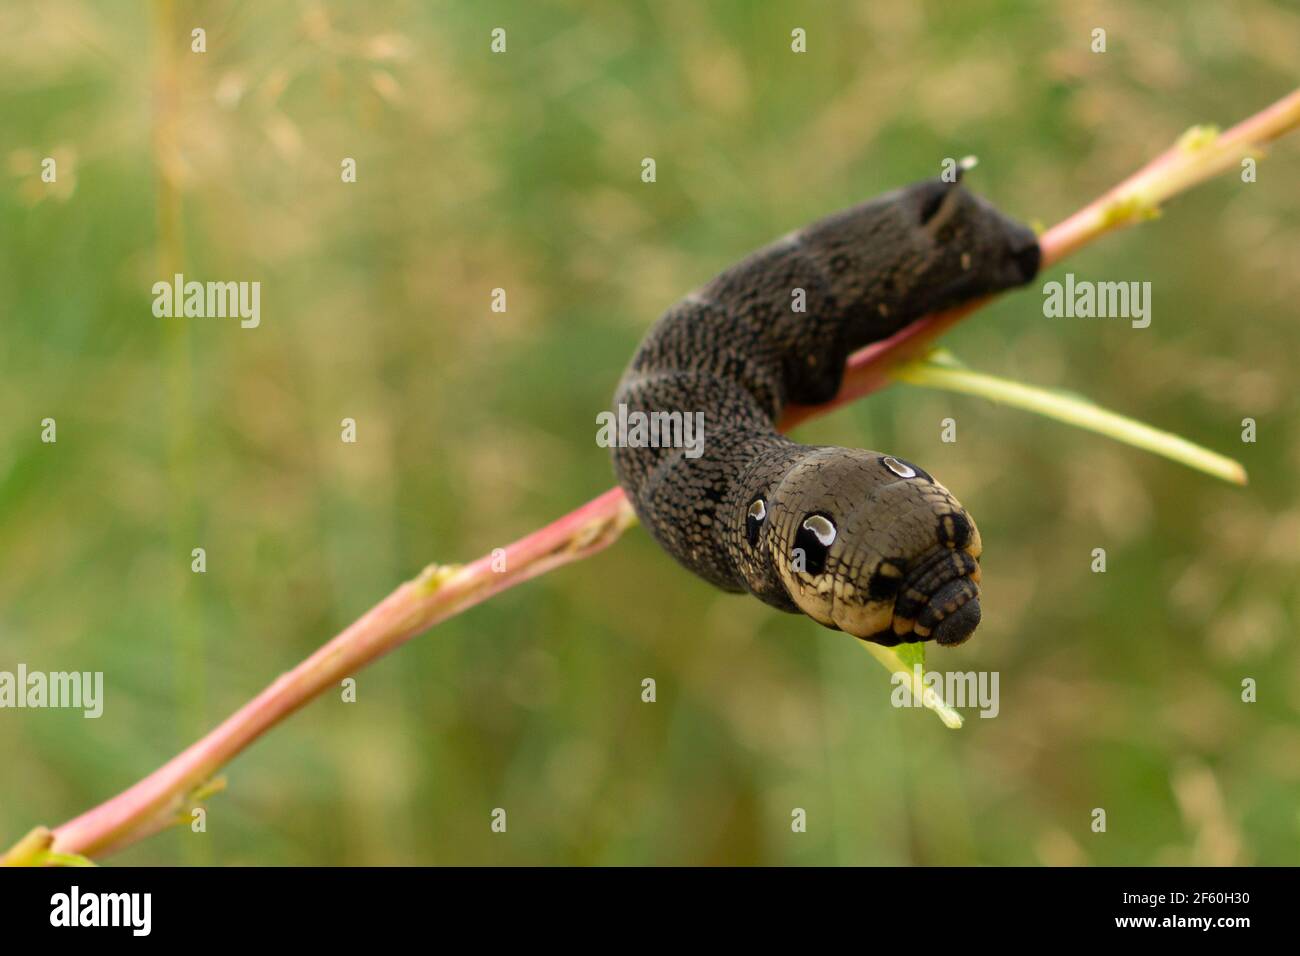 Caterpillar of Elephant hawkmoth on a twig - deilephila elpenor. Stock Photo